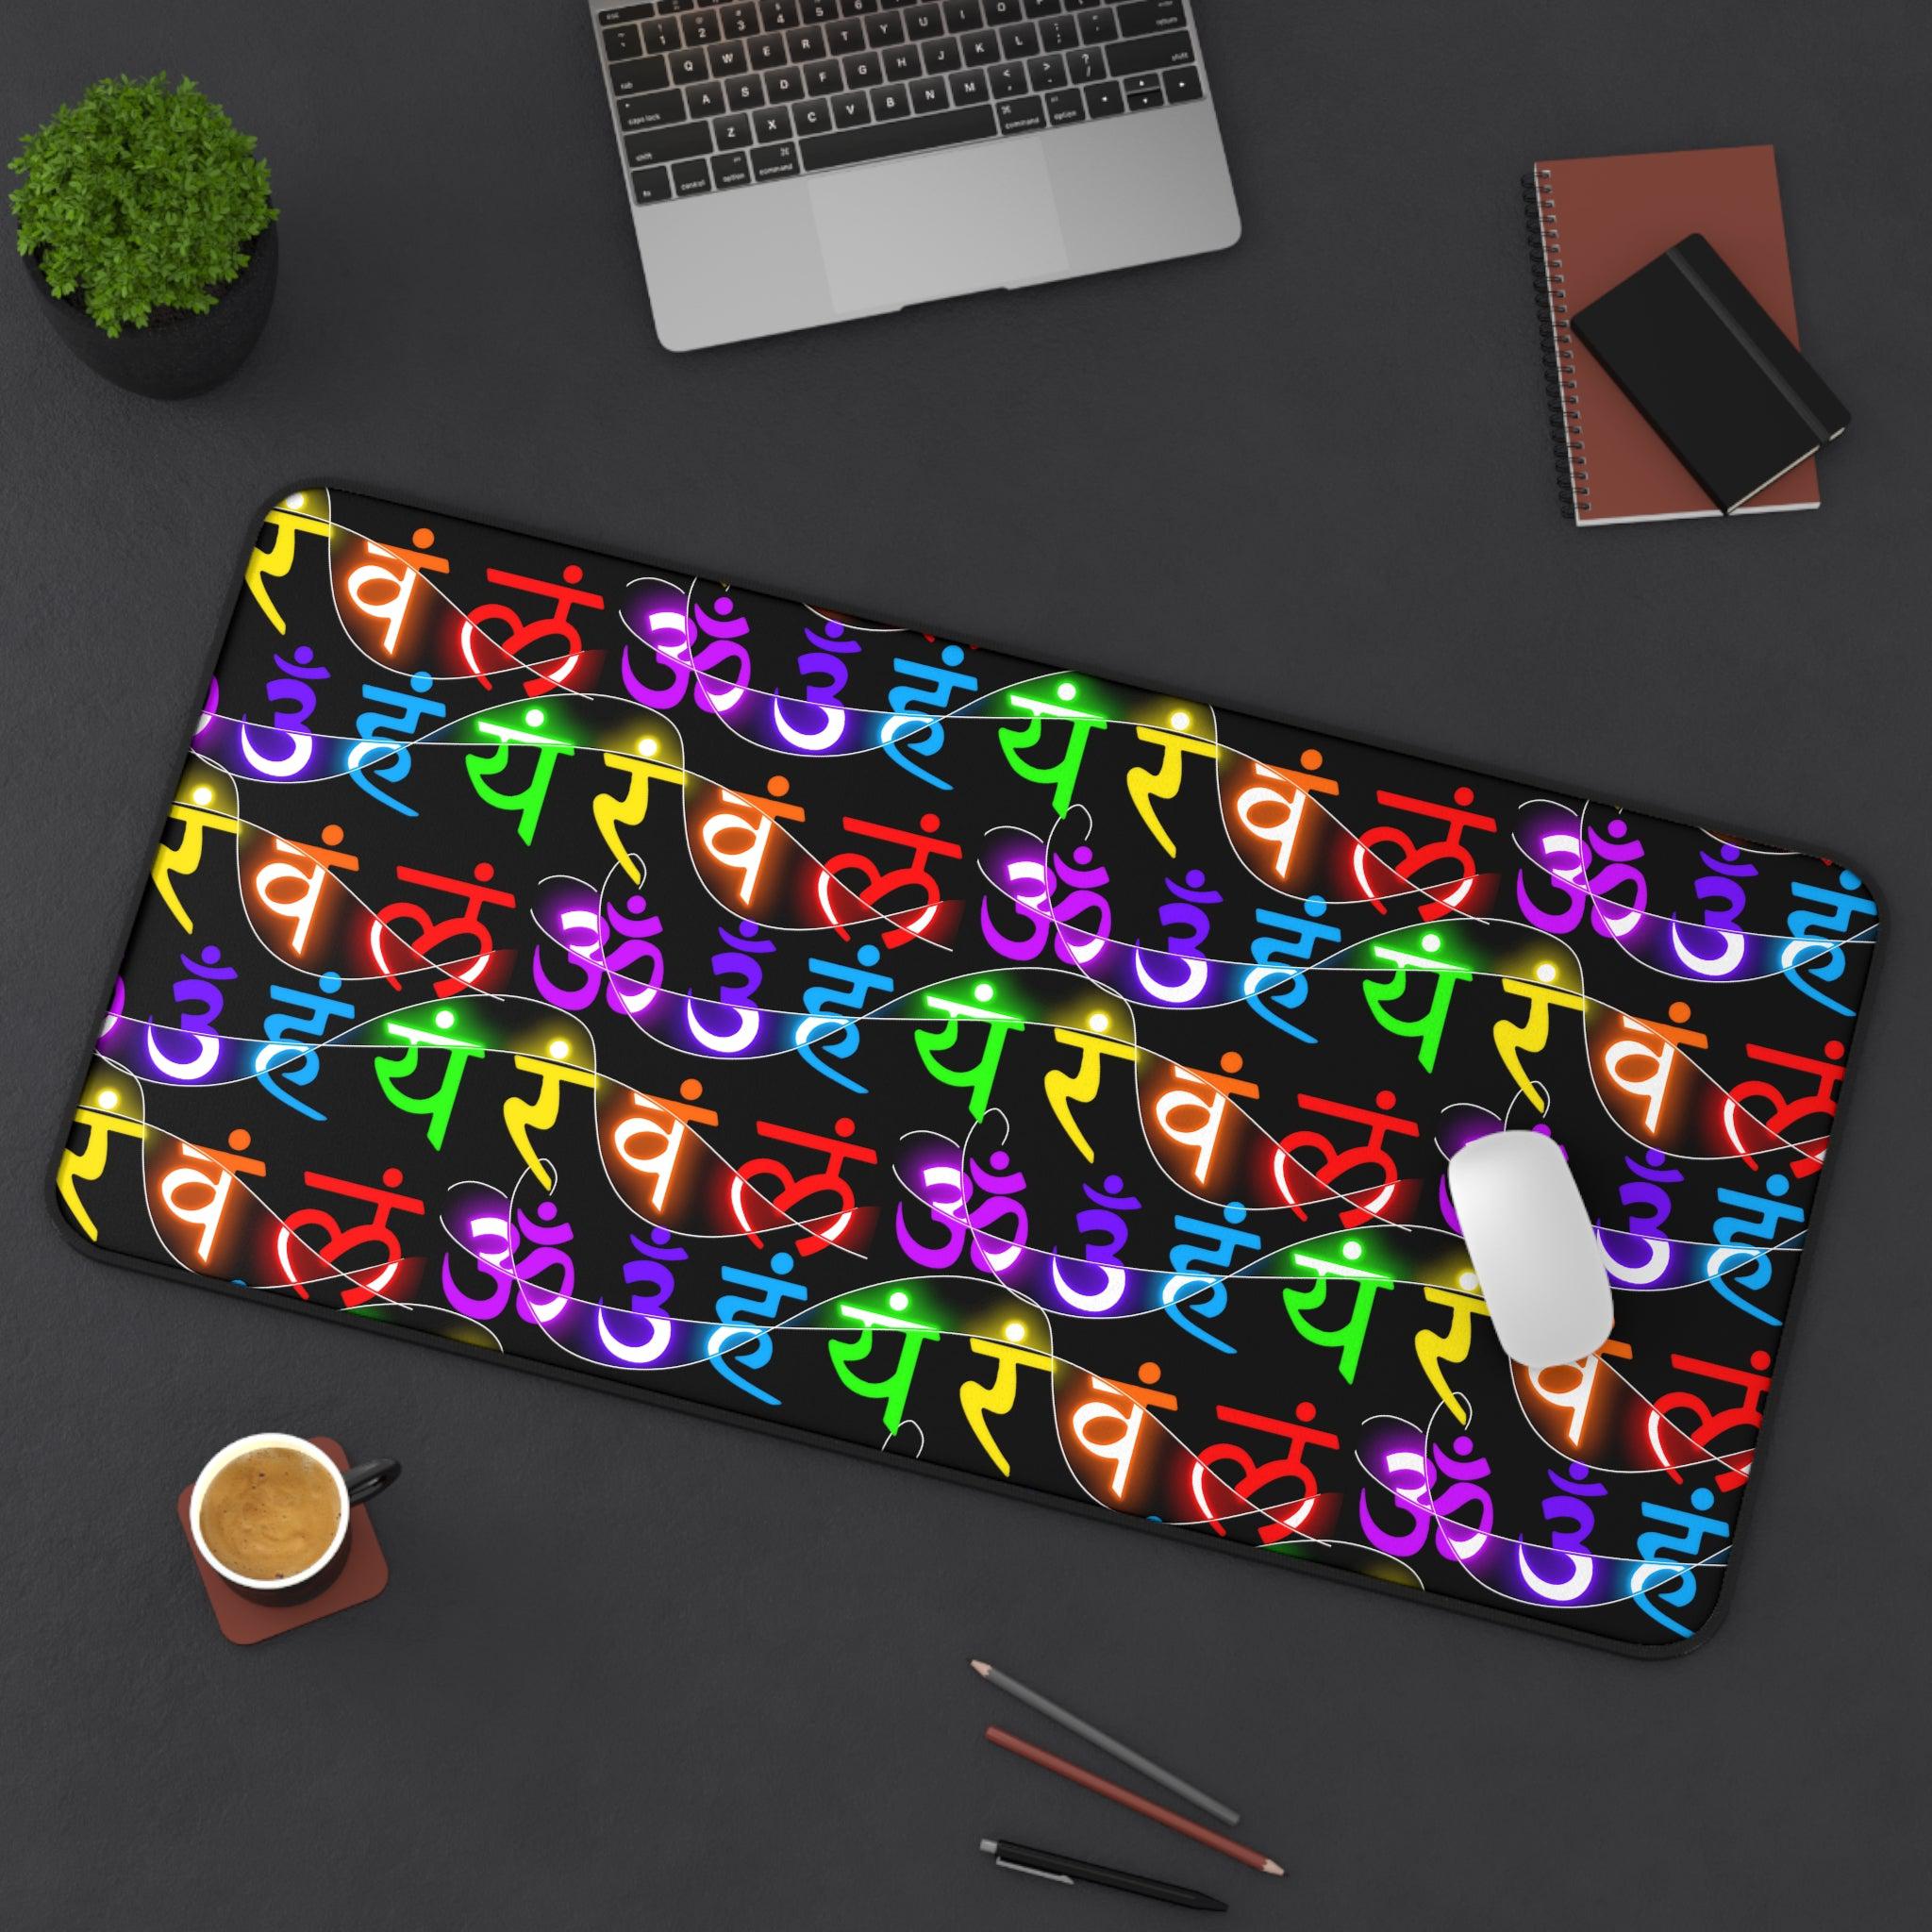 Chakra Mouse Pad / Desk Mat (Version 3)